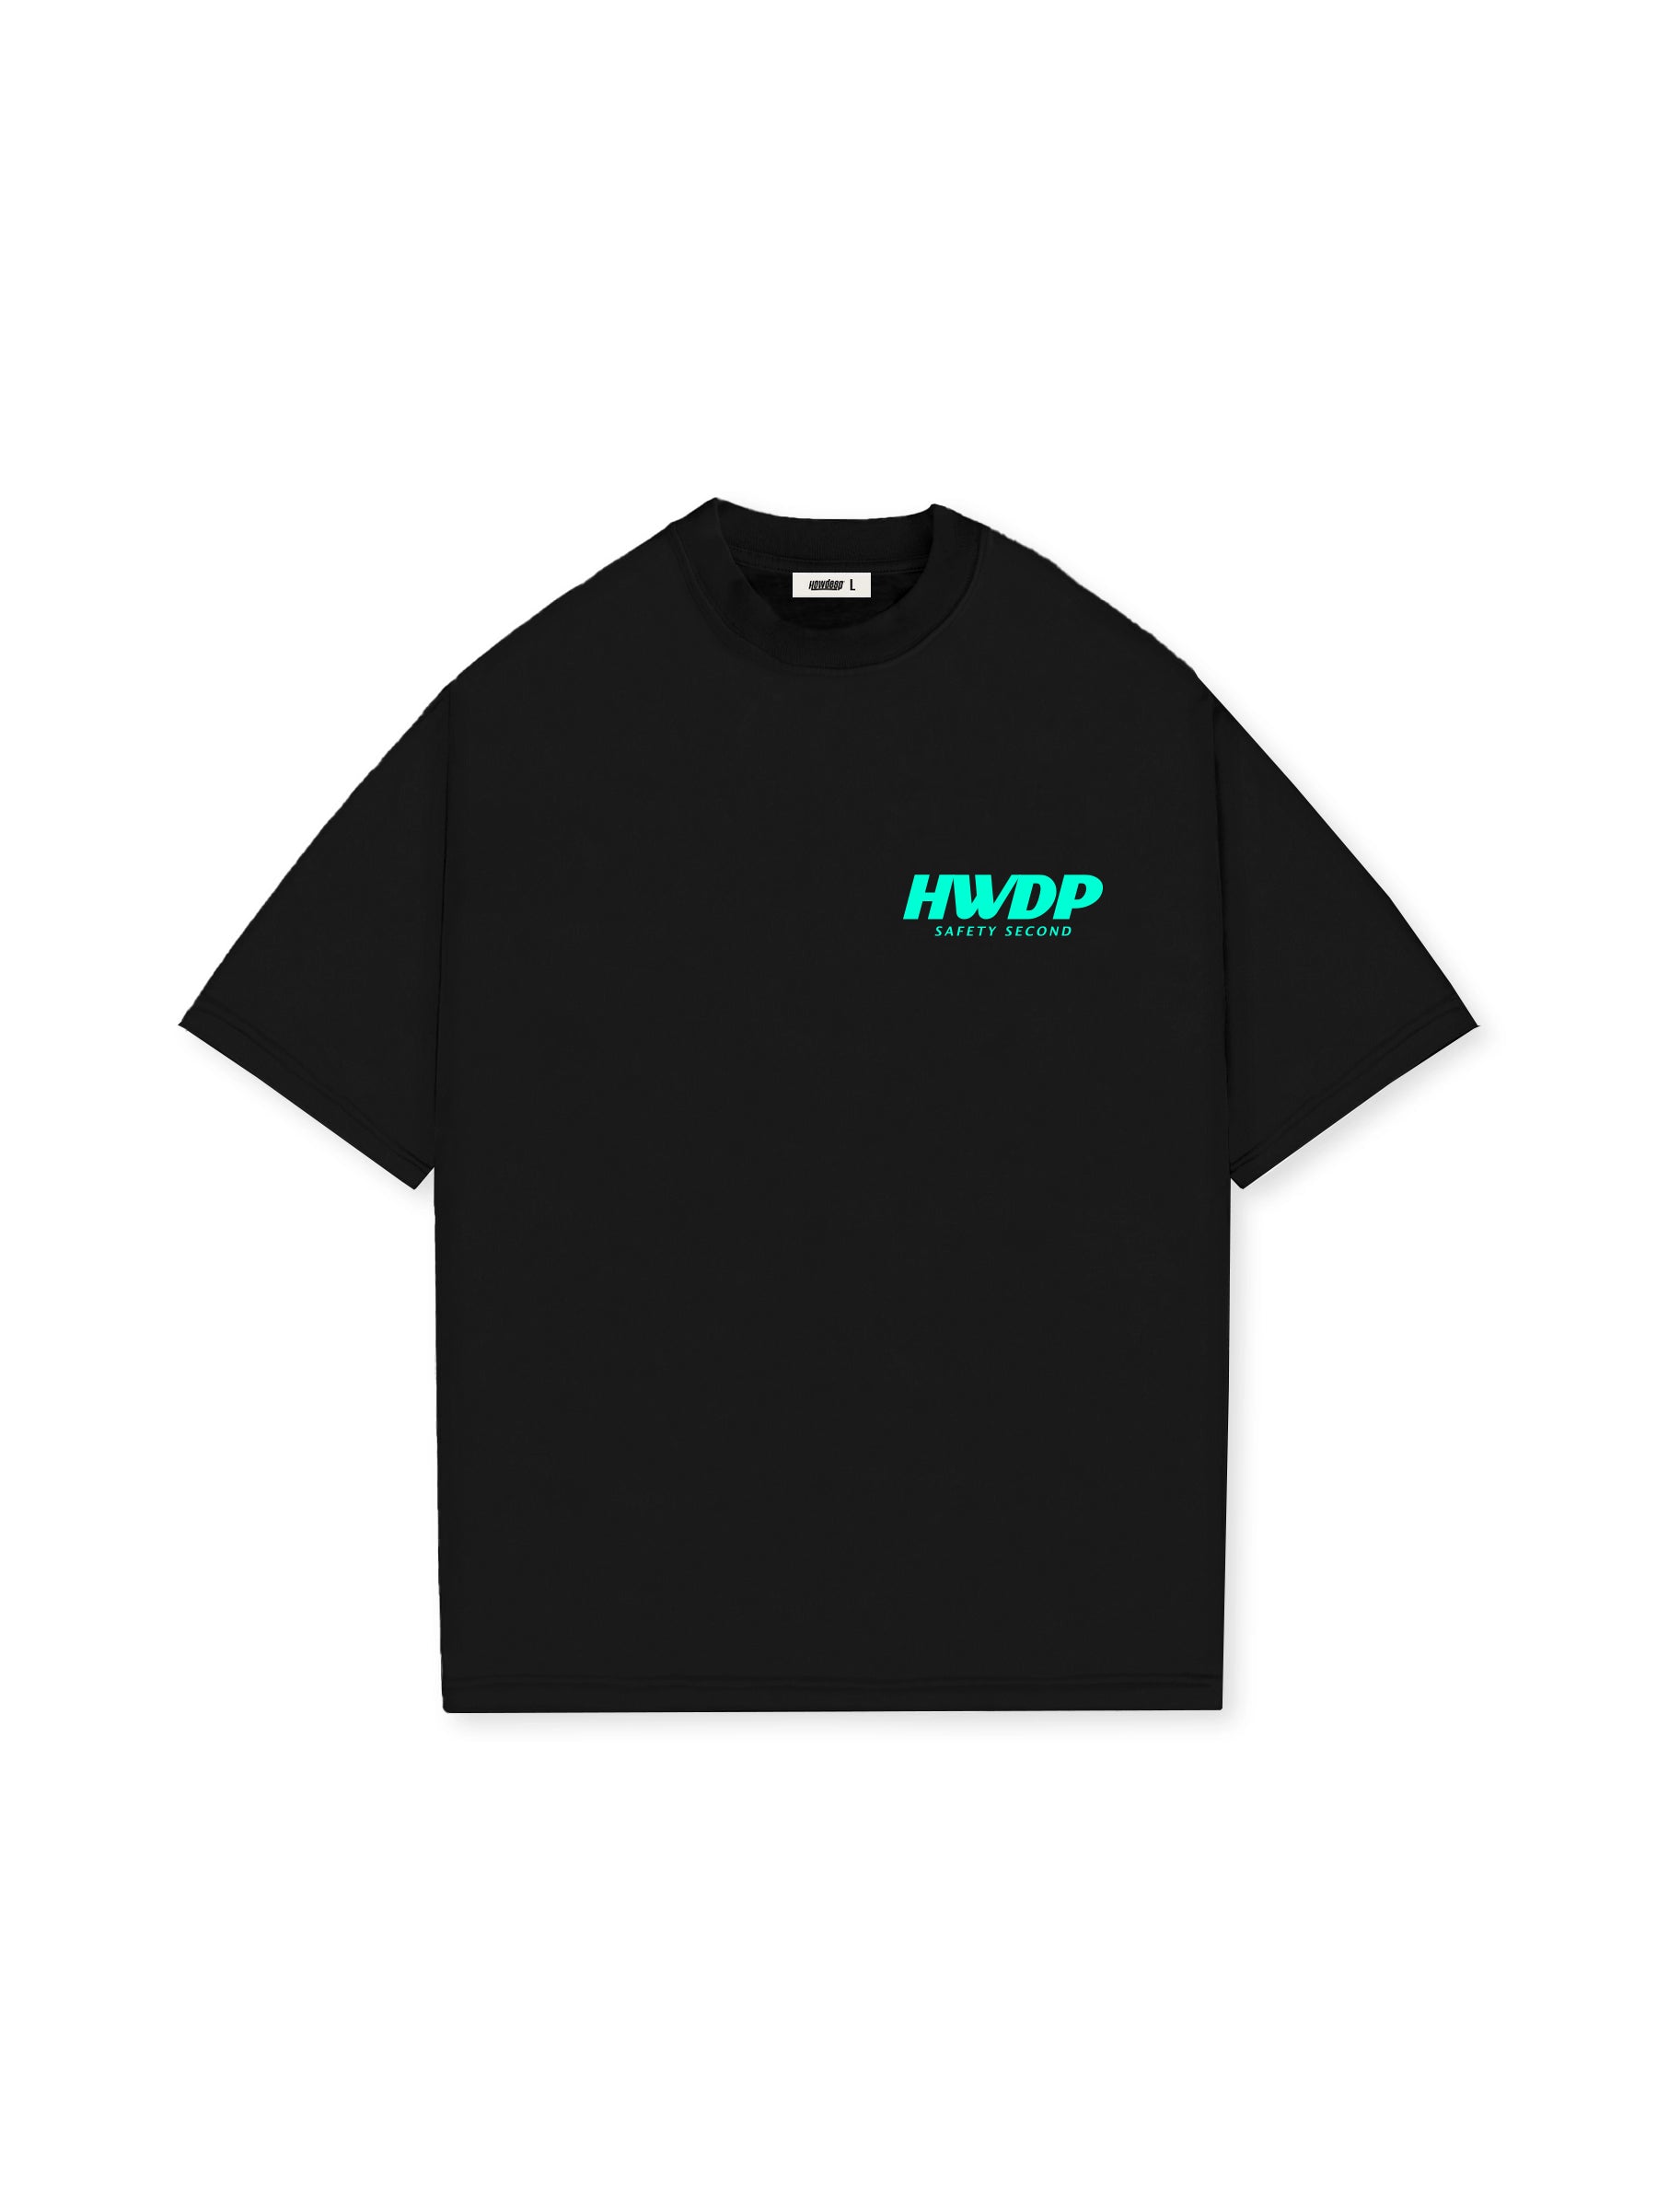 HWDP SAFETY MINT - Premium Big Oversized Shirt